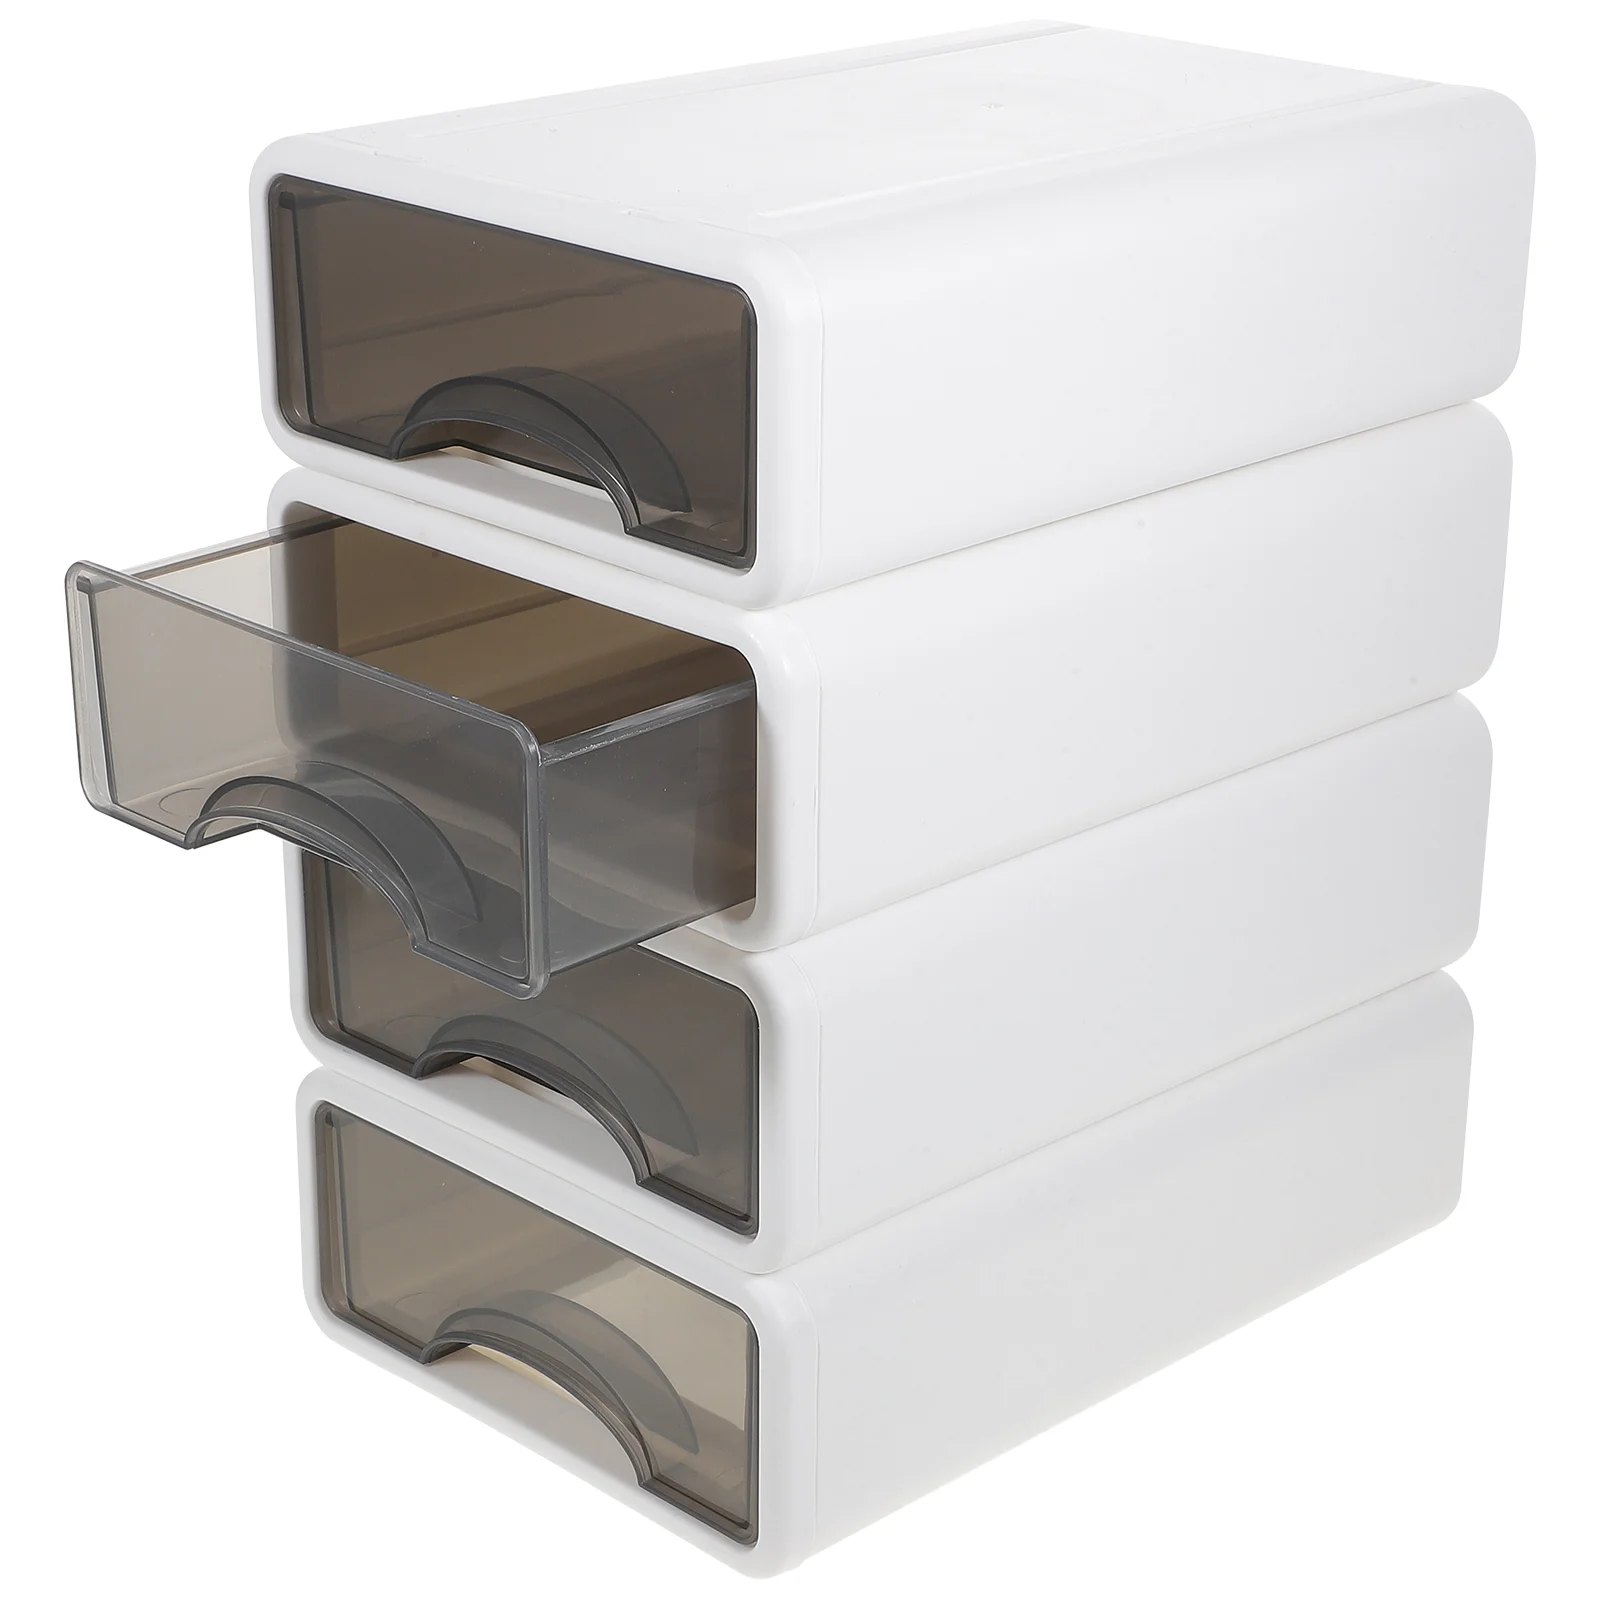 

4 Pcs Drawer Storage Box Drawers Desk Display Case Organizers Desktop Sundry Holder Showcase Holders Pp Office Makeup